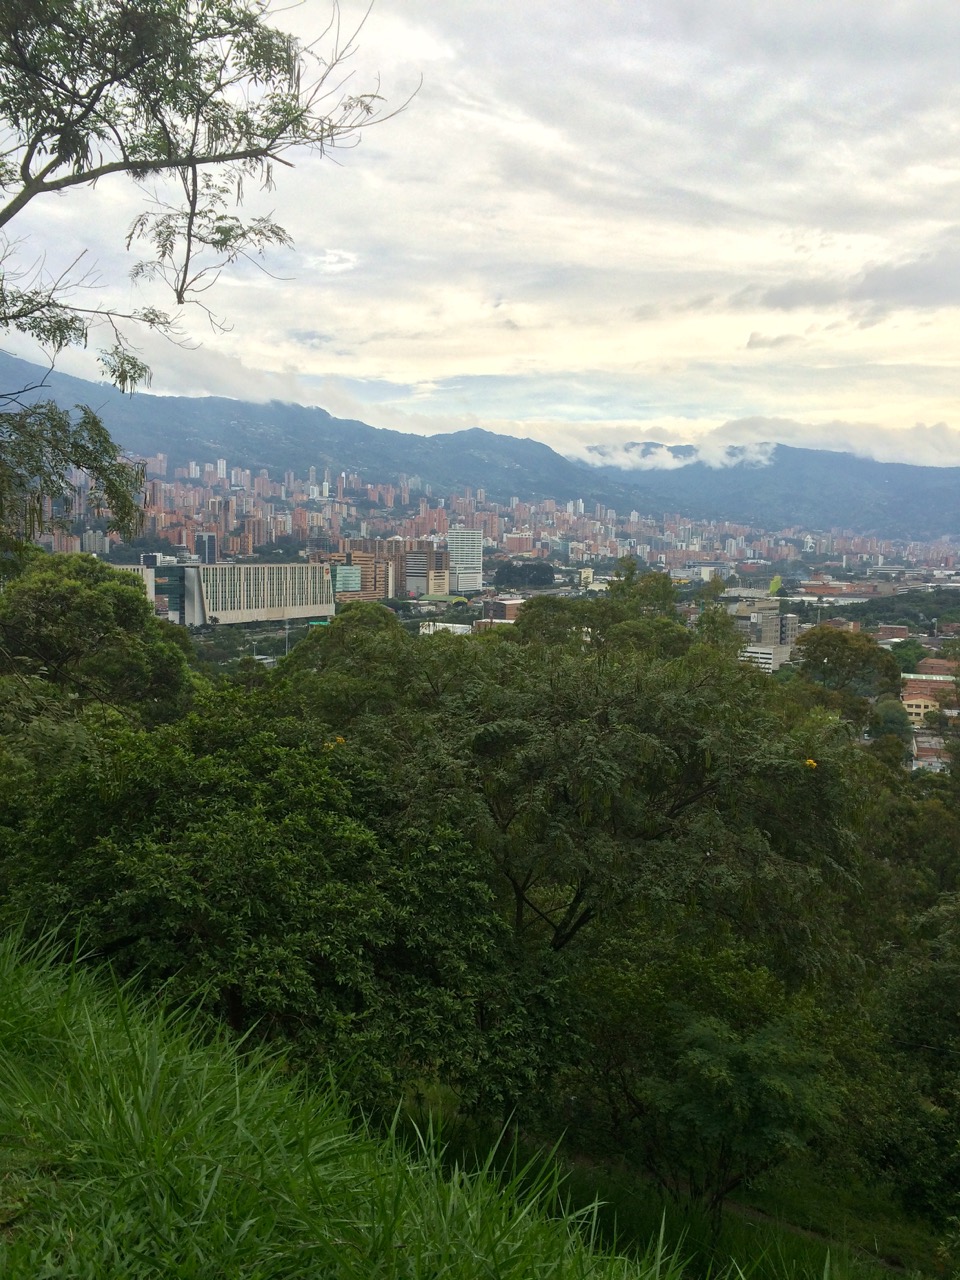 View of Medellin from Nutibara Hill